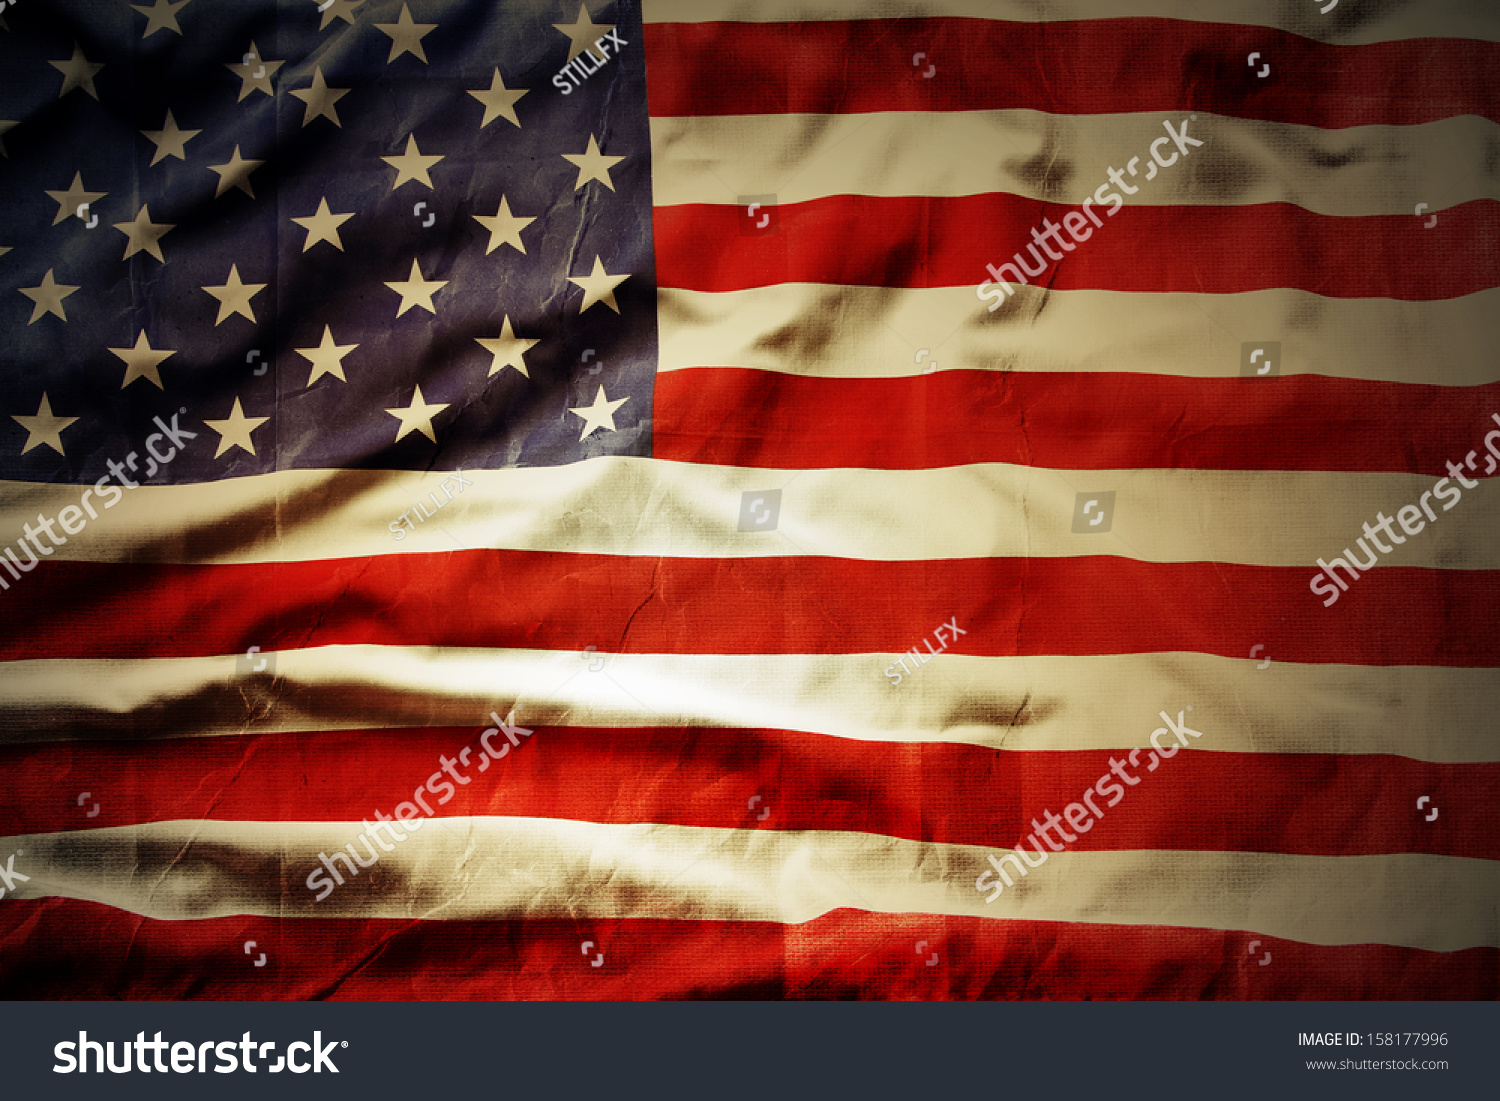 Closeup of grunge American flag #158177996